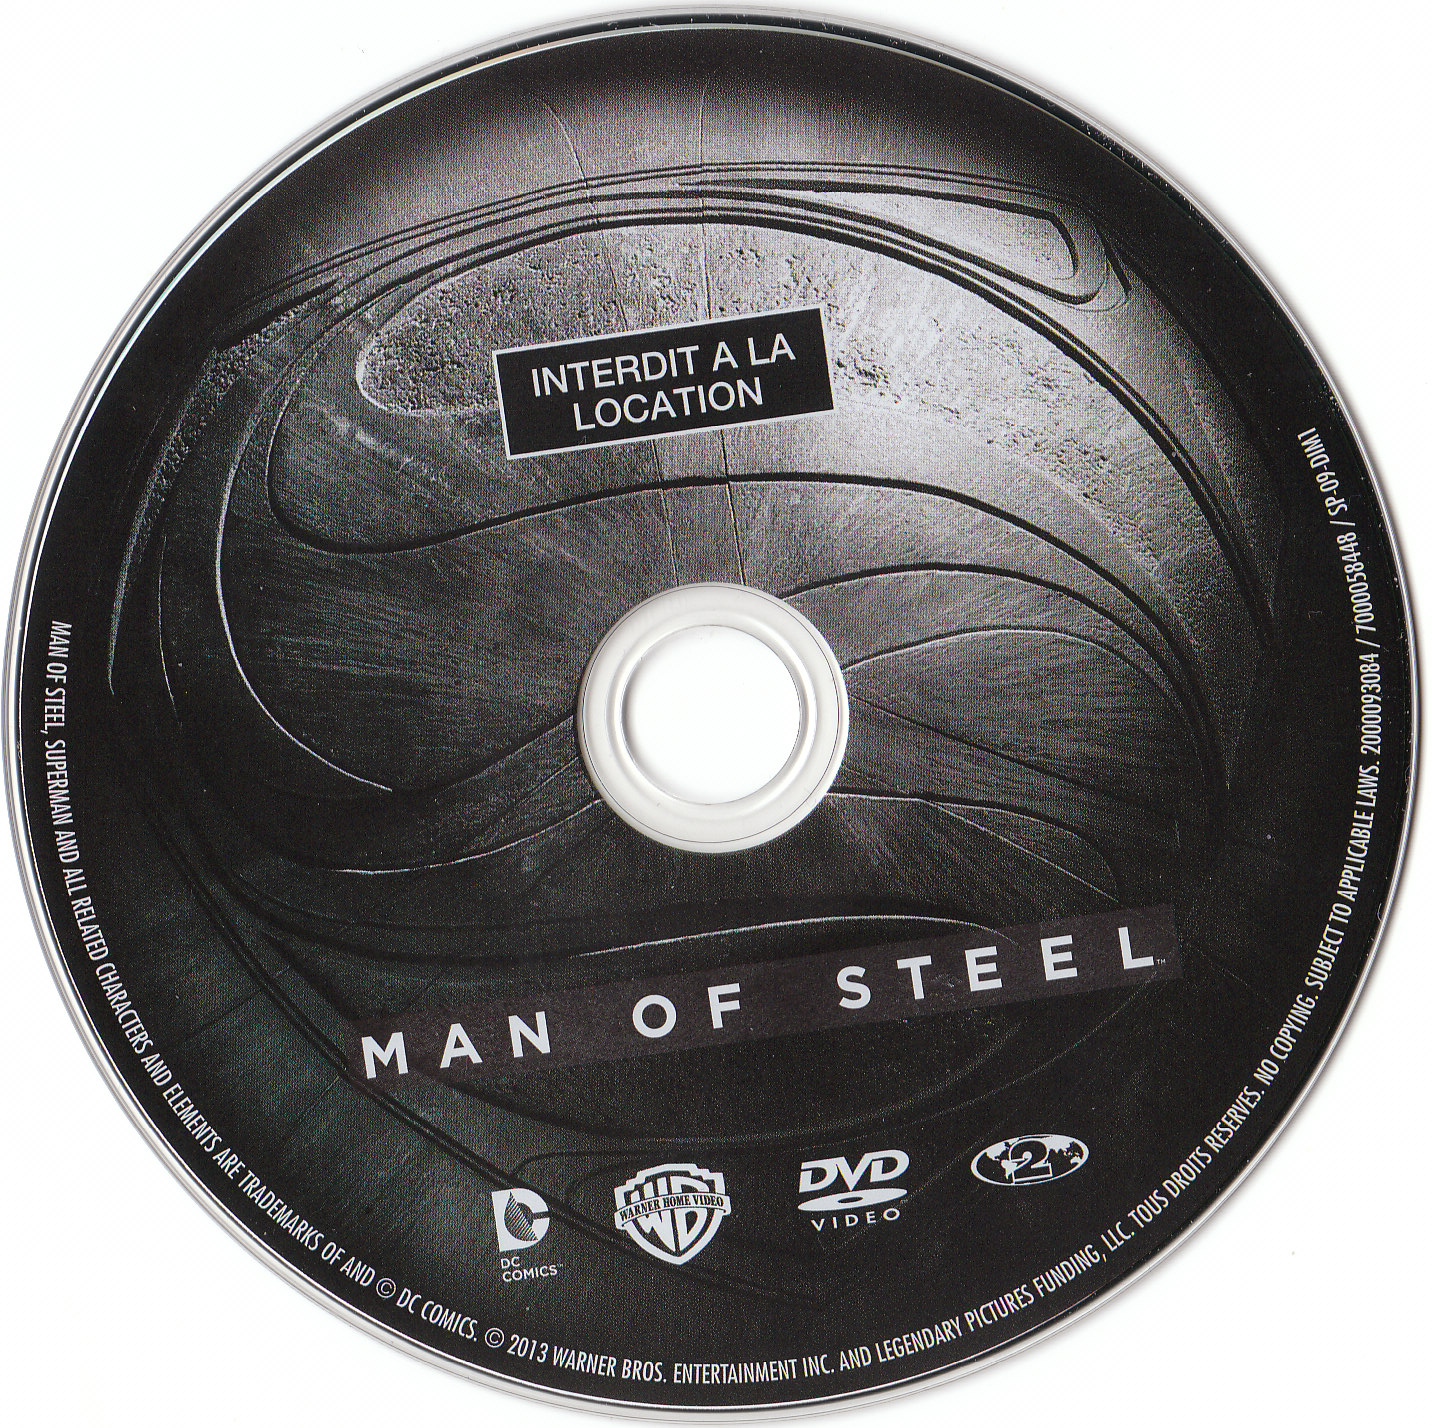 Man of steel